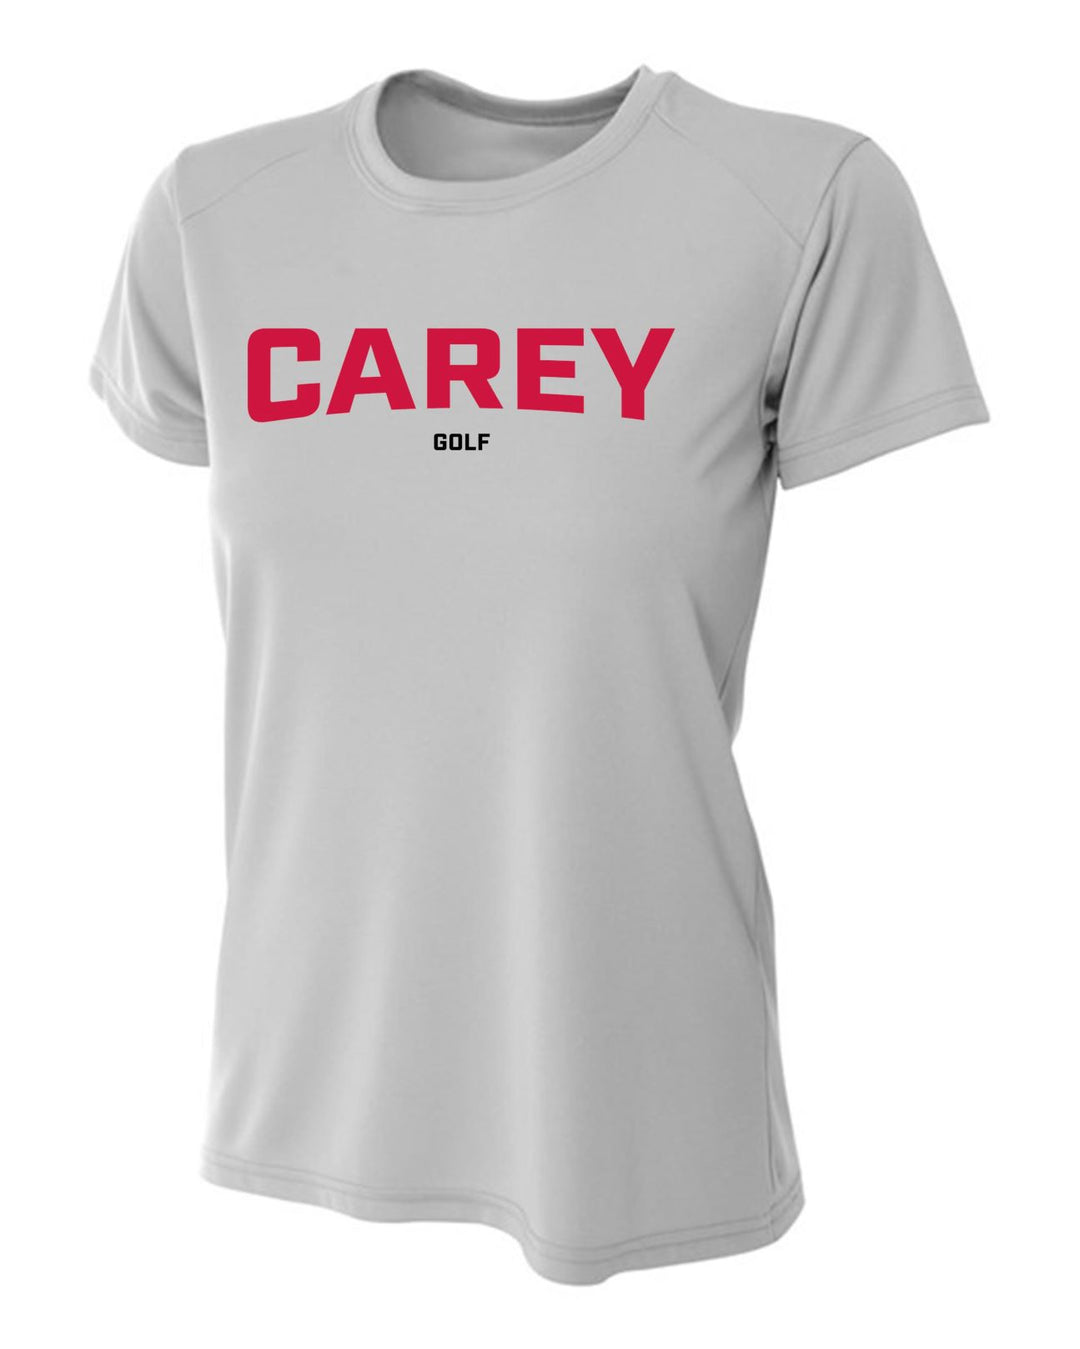 WCU Golf Women's Short-Sleeve Performance Shirt WCU Golf Silver CAREY - Third Coast Soccer